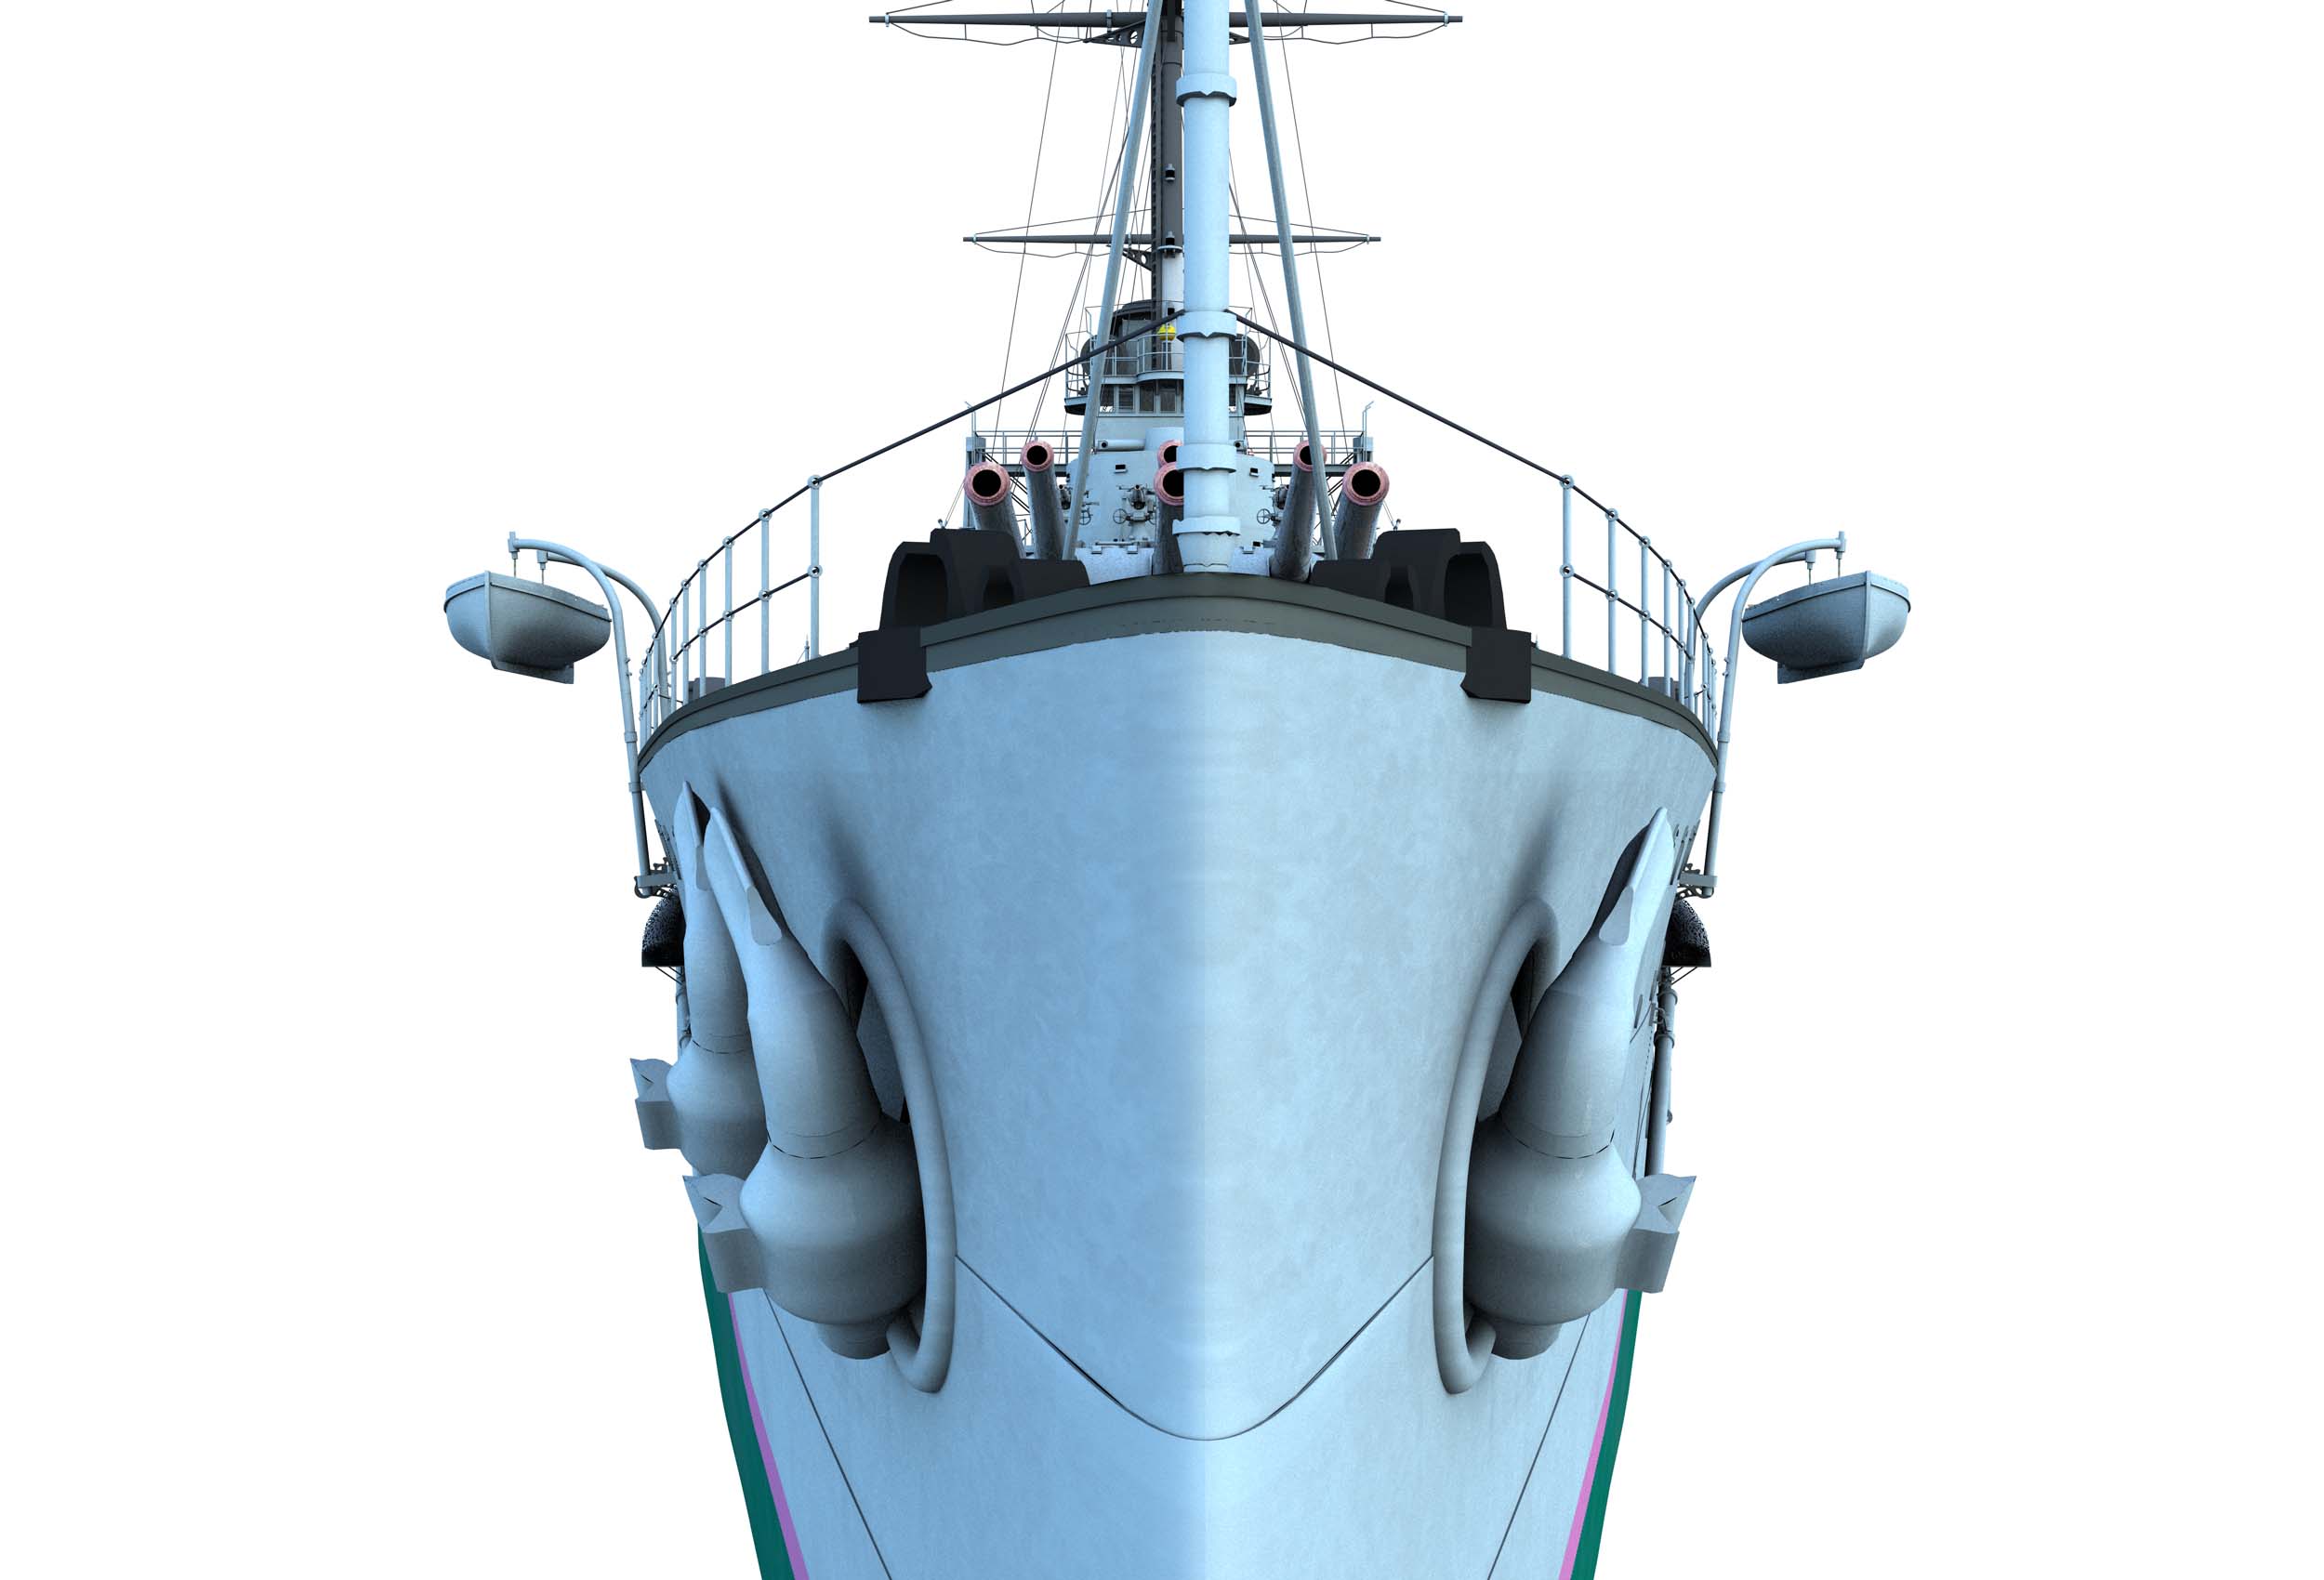 https://0901.nccdn.net/4_2/000/000/060/85f/CK120-Partial-Ship-Bow-Straight-on-Anchors.jpg